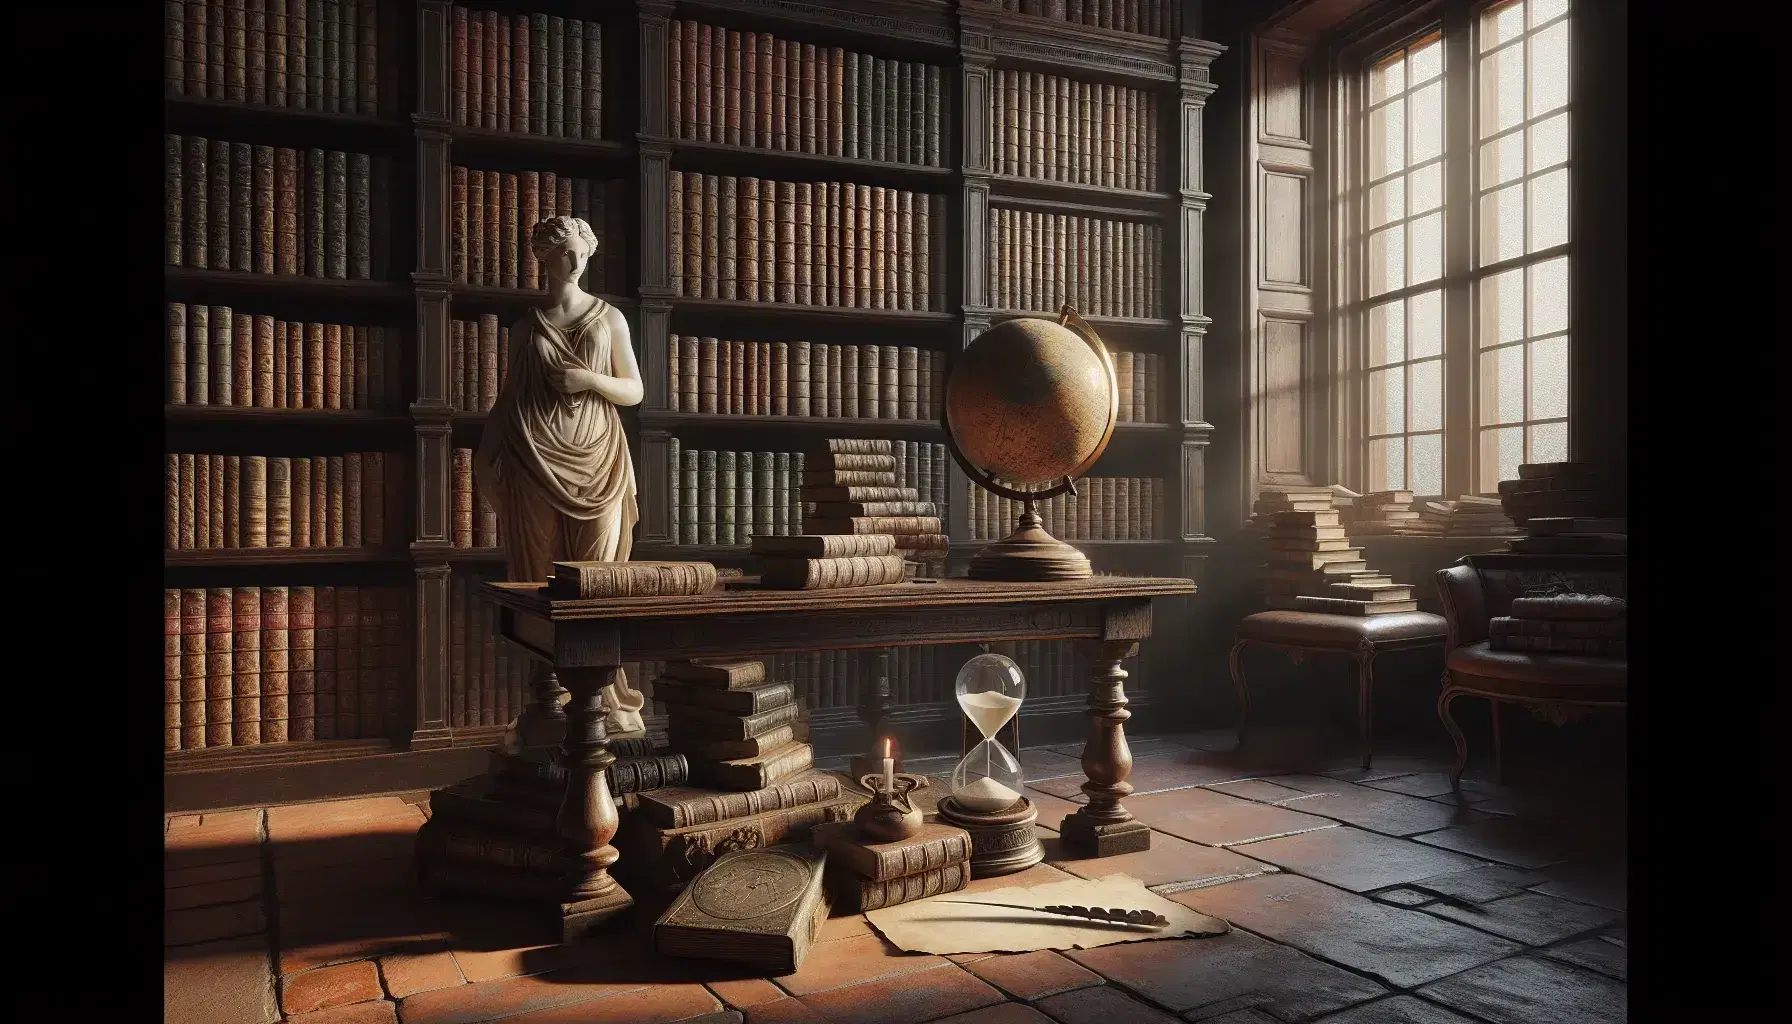 Biblioteca antigua con estanterías de madera oscura llenas de libros, mesa central con globo terráqueo antiguo y reloj de arena, escultura de mármol y luz natural entrando por ventana.